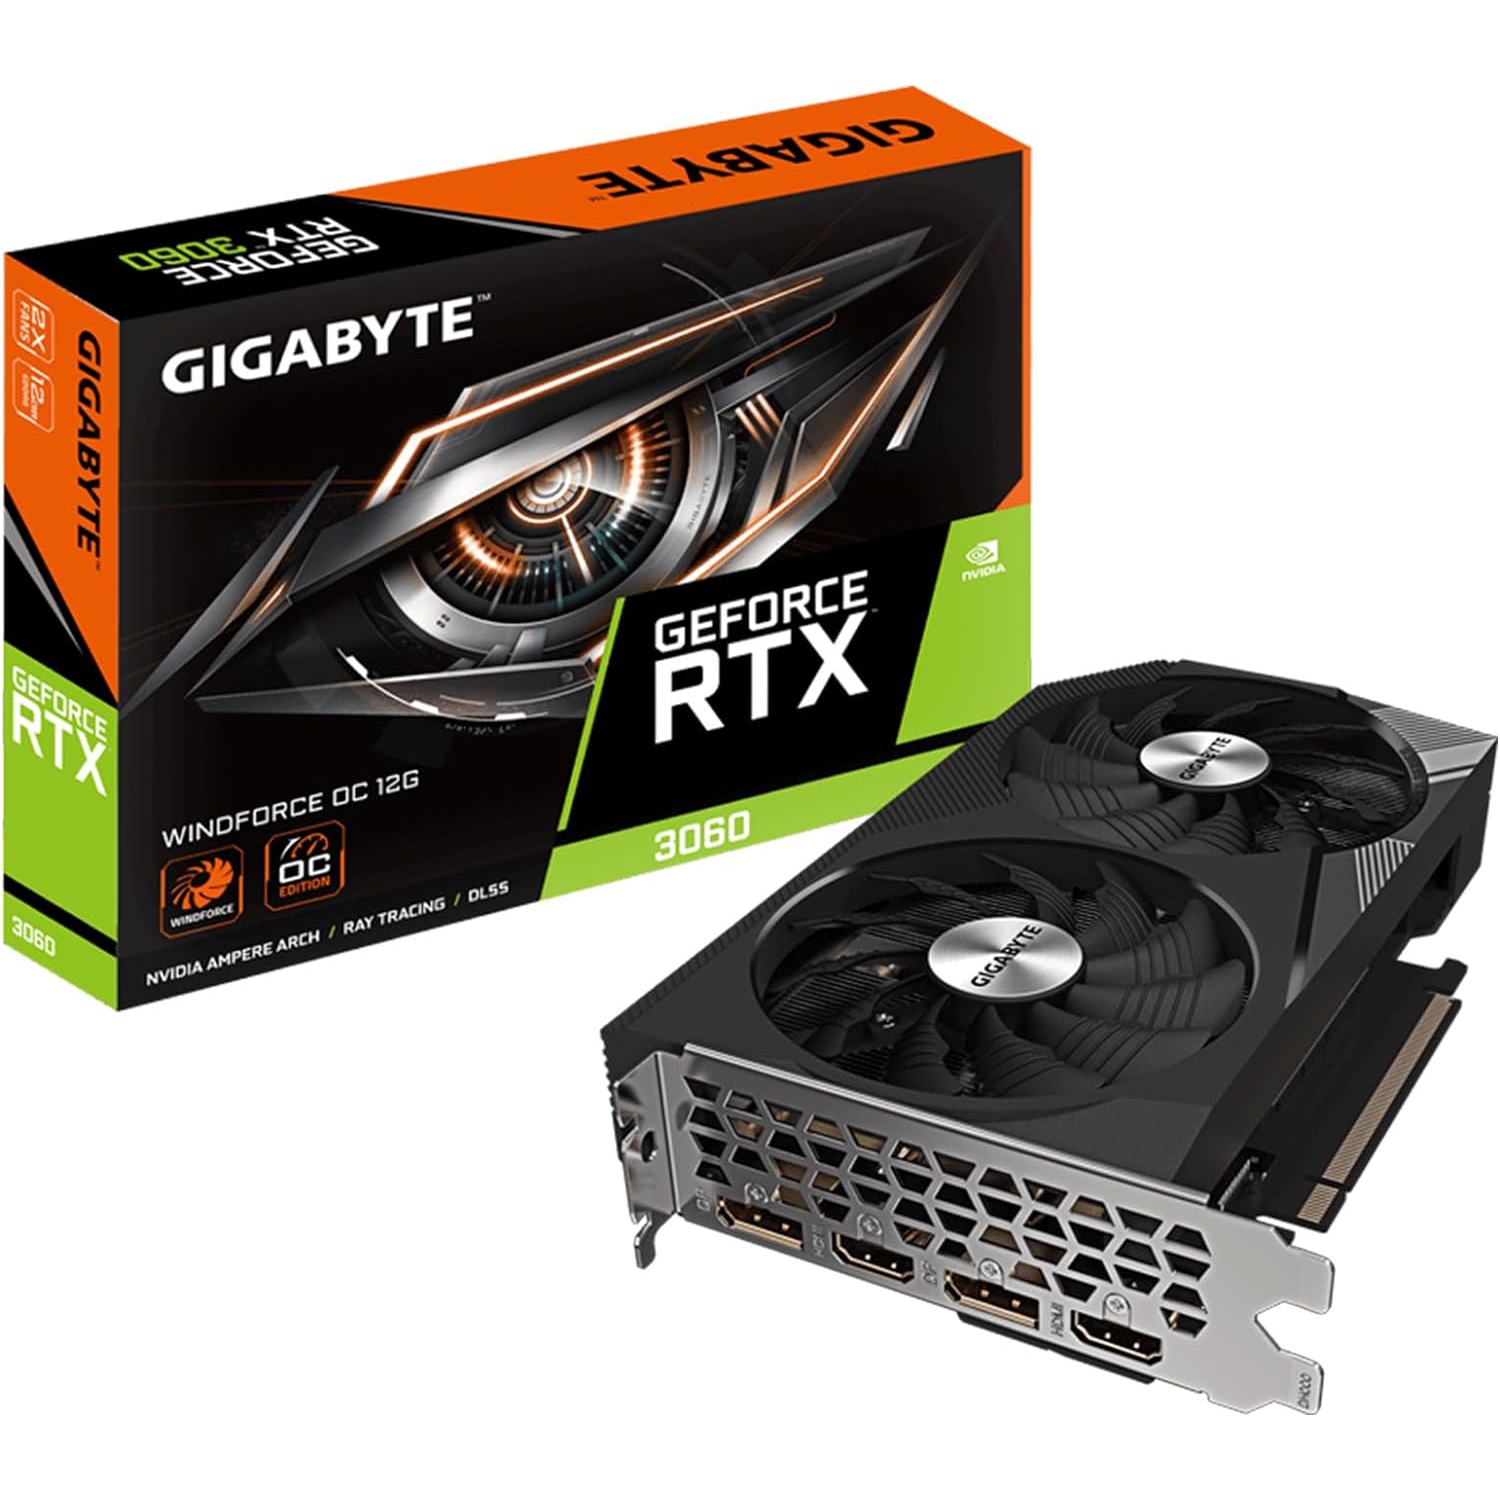 GIGABYTE GeForce RTX 3060 WINDFORCE OC 12G (REV2.0) Graphics Card, 2X WINDFORCE Fans, 12GB 192-bit GDDR6, GV-N3060WF2OC-12GD REV2.0 Video Card